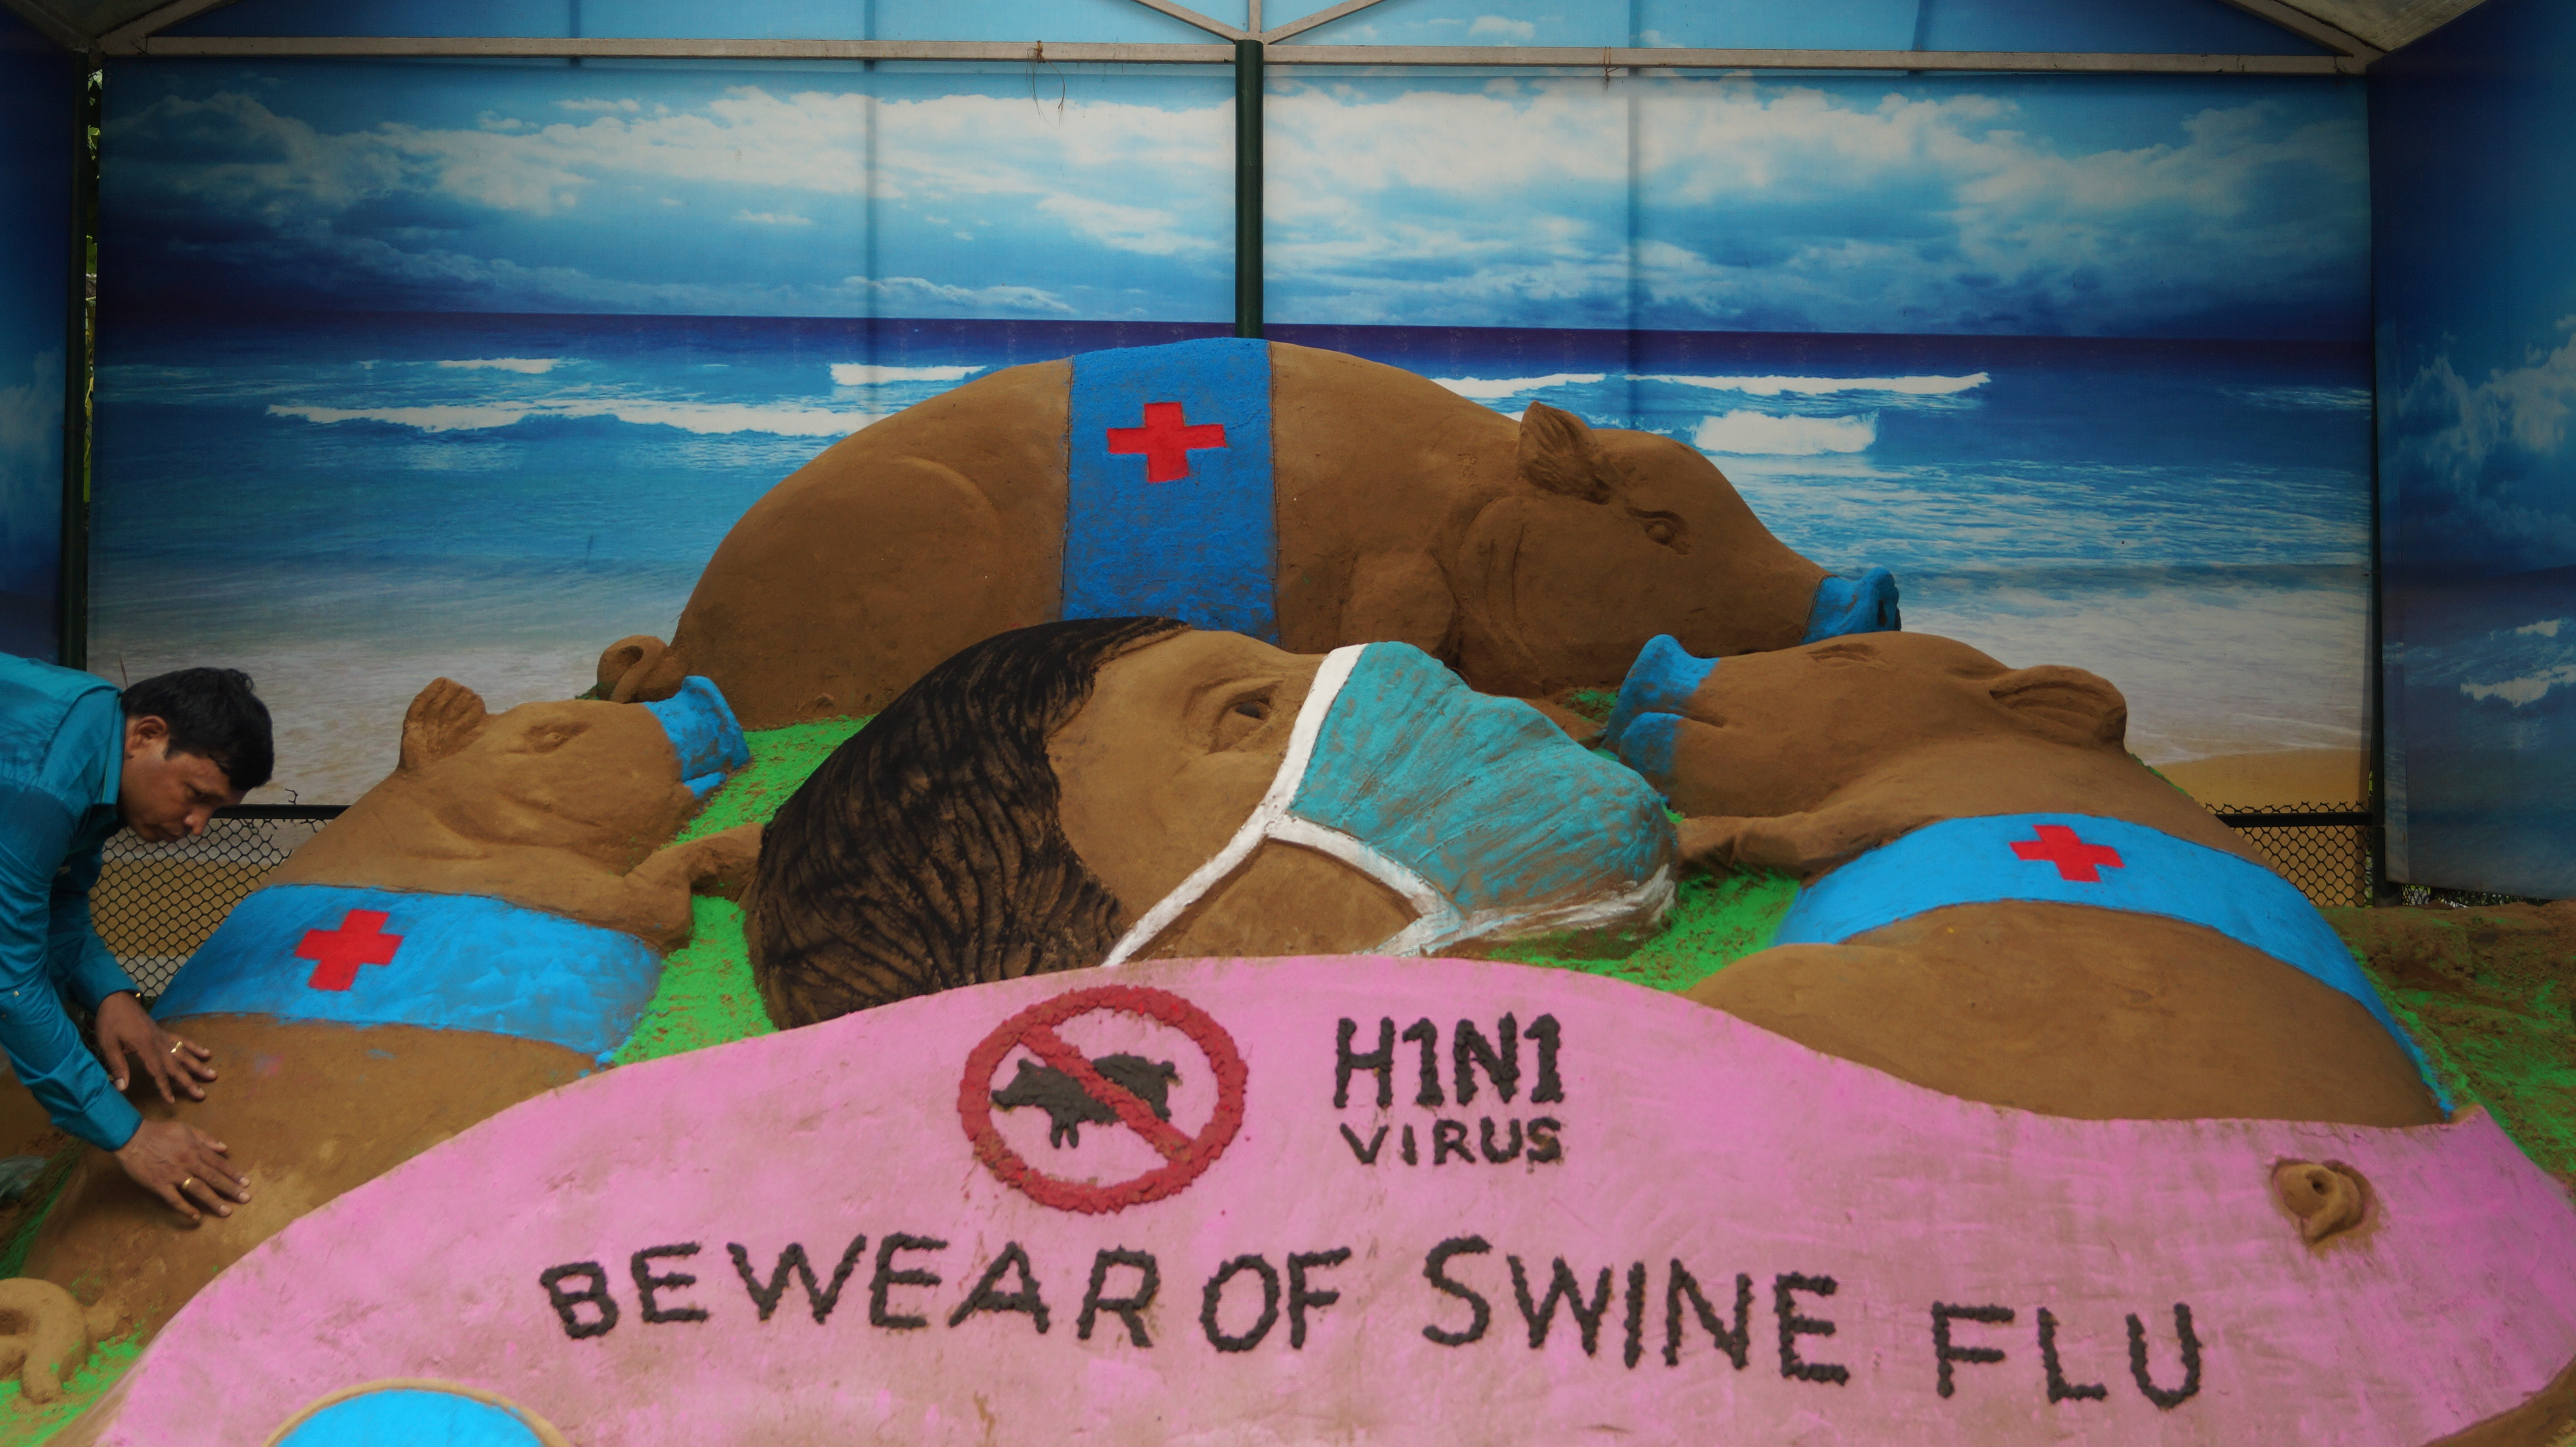 Sand art by Subala Maharana to spread awareness on swine flu